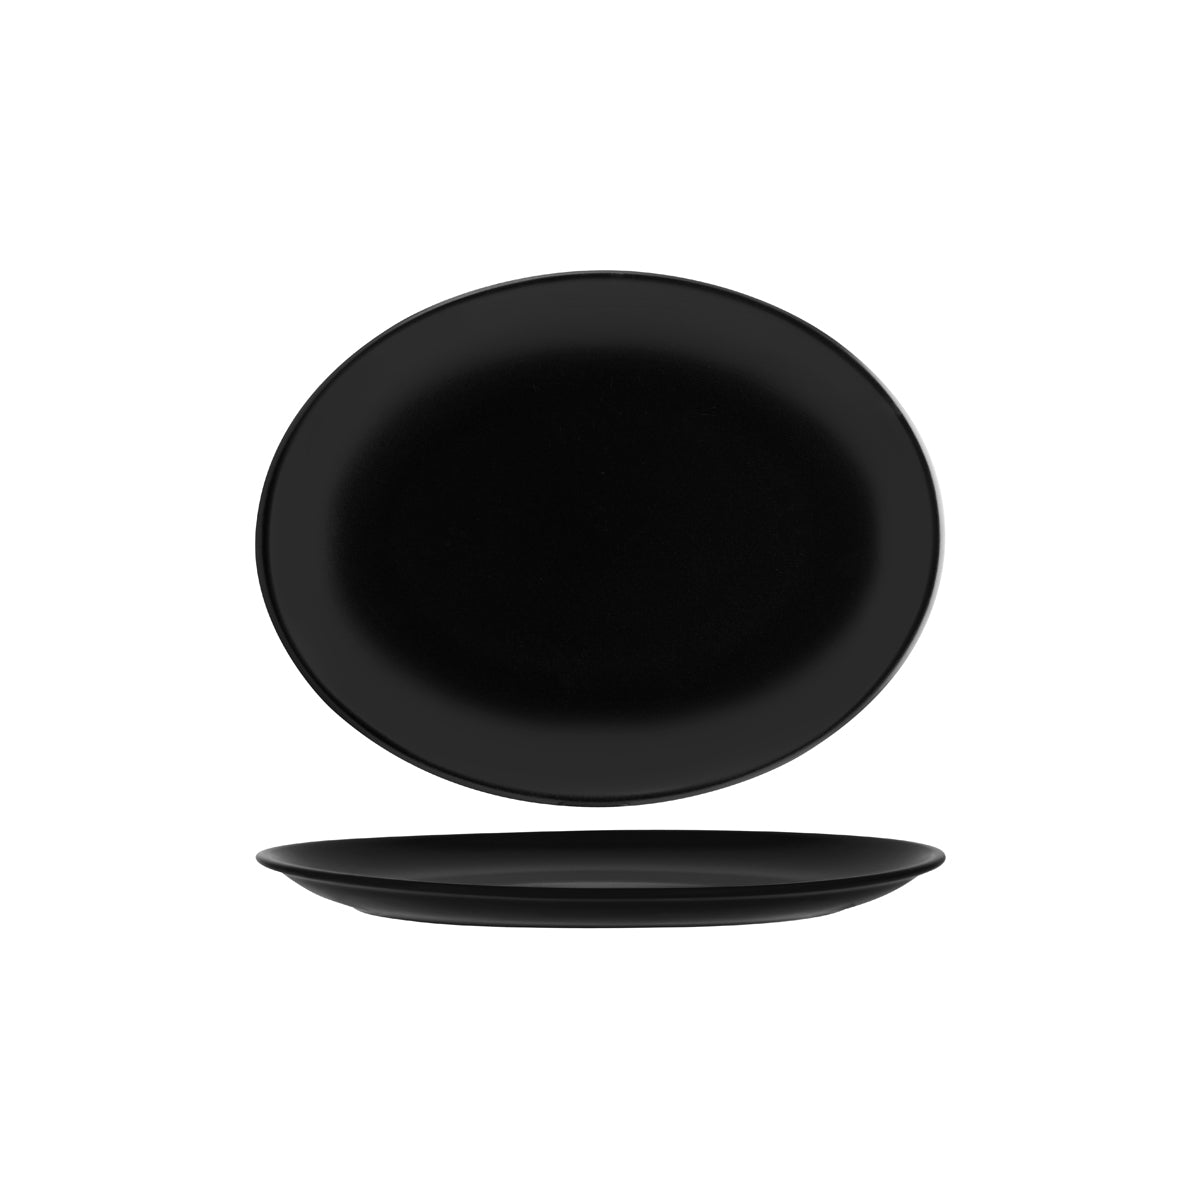 130776 Bonna Notte Black Oval Coupe Platter 360x280x30mm Tomkin Australia Hospitality Supplies